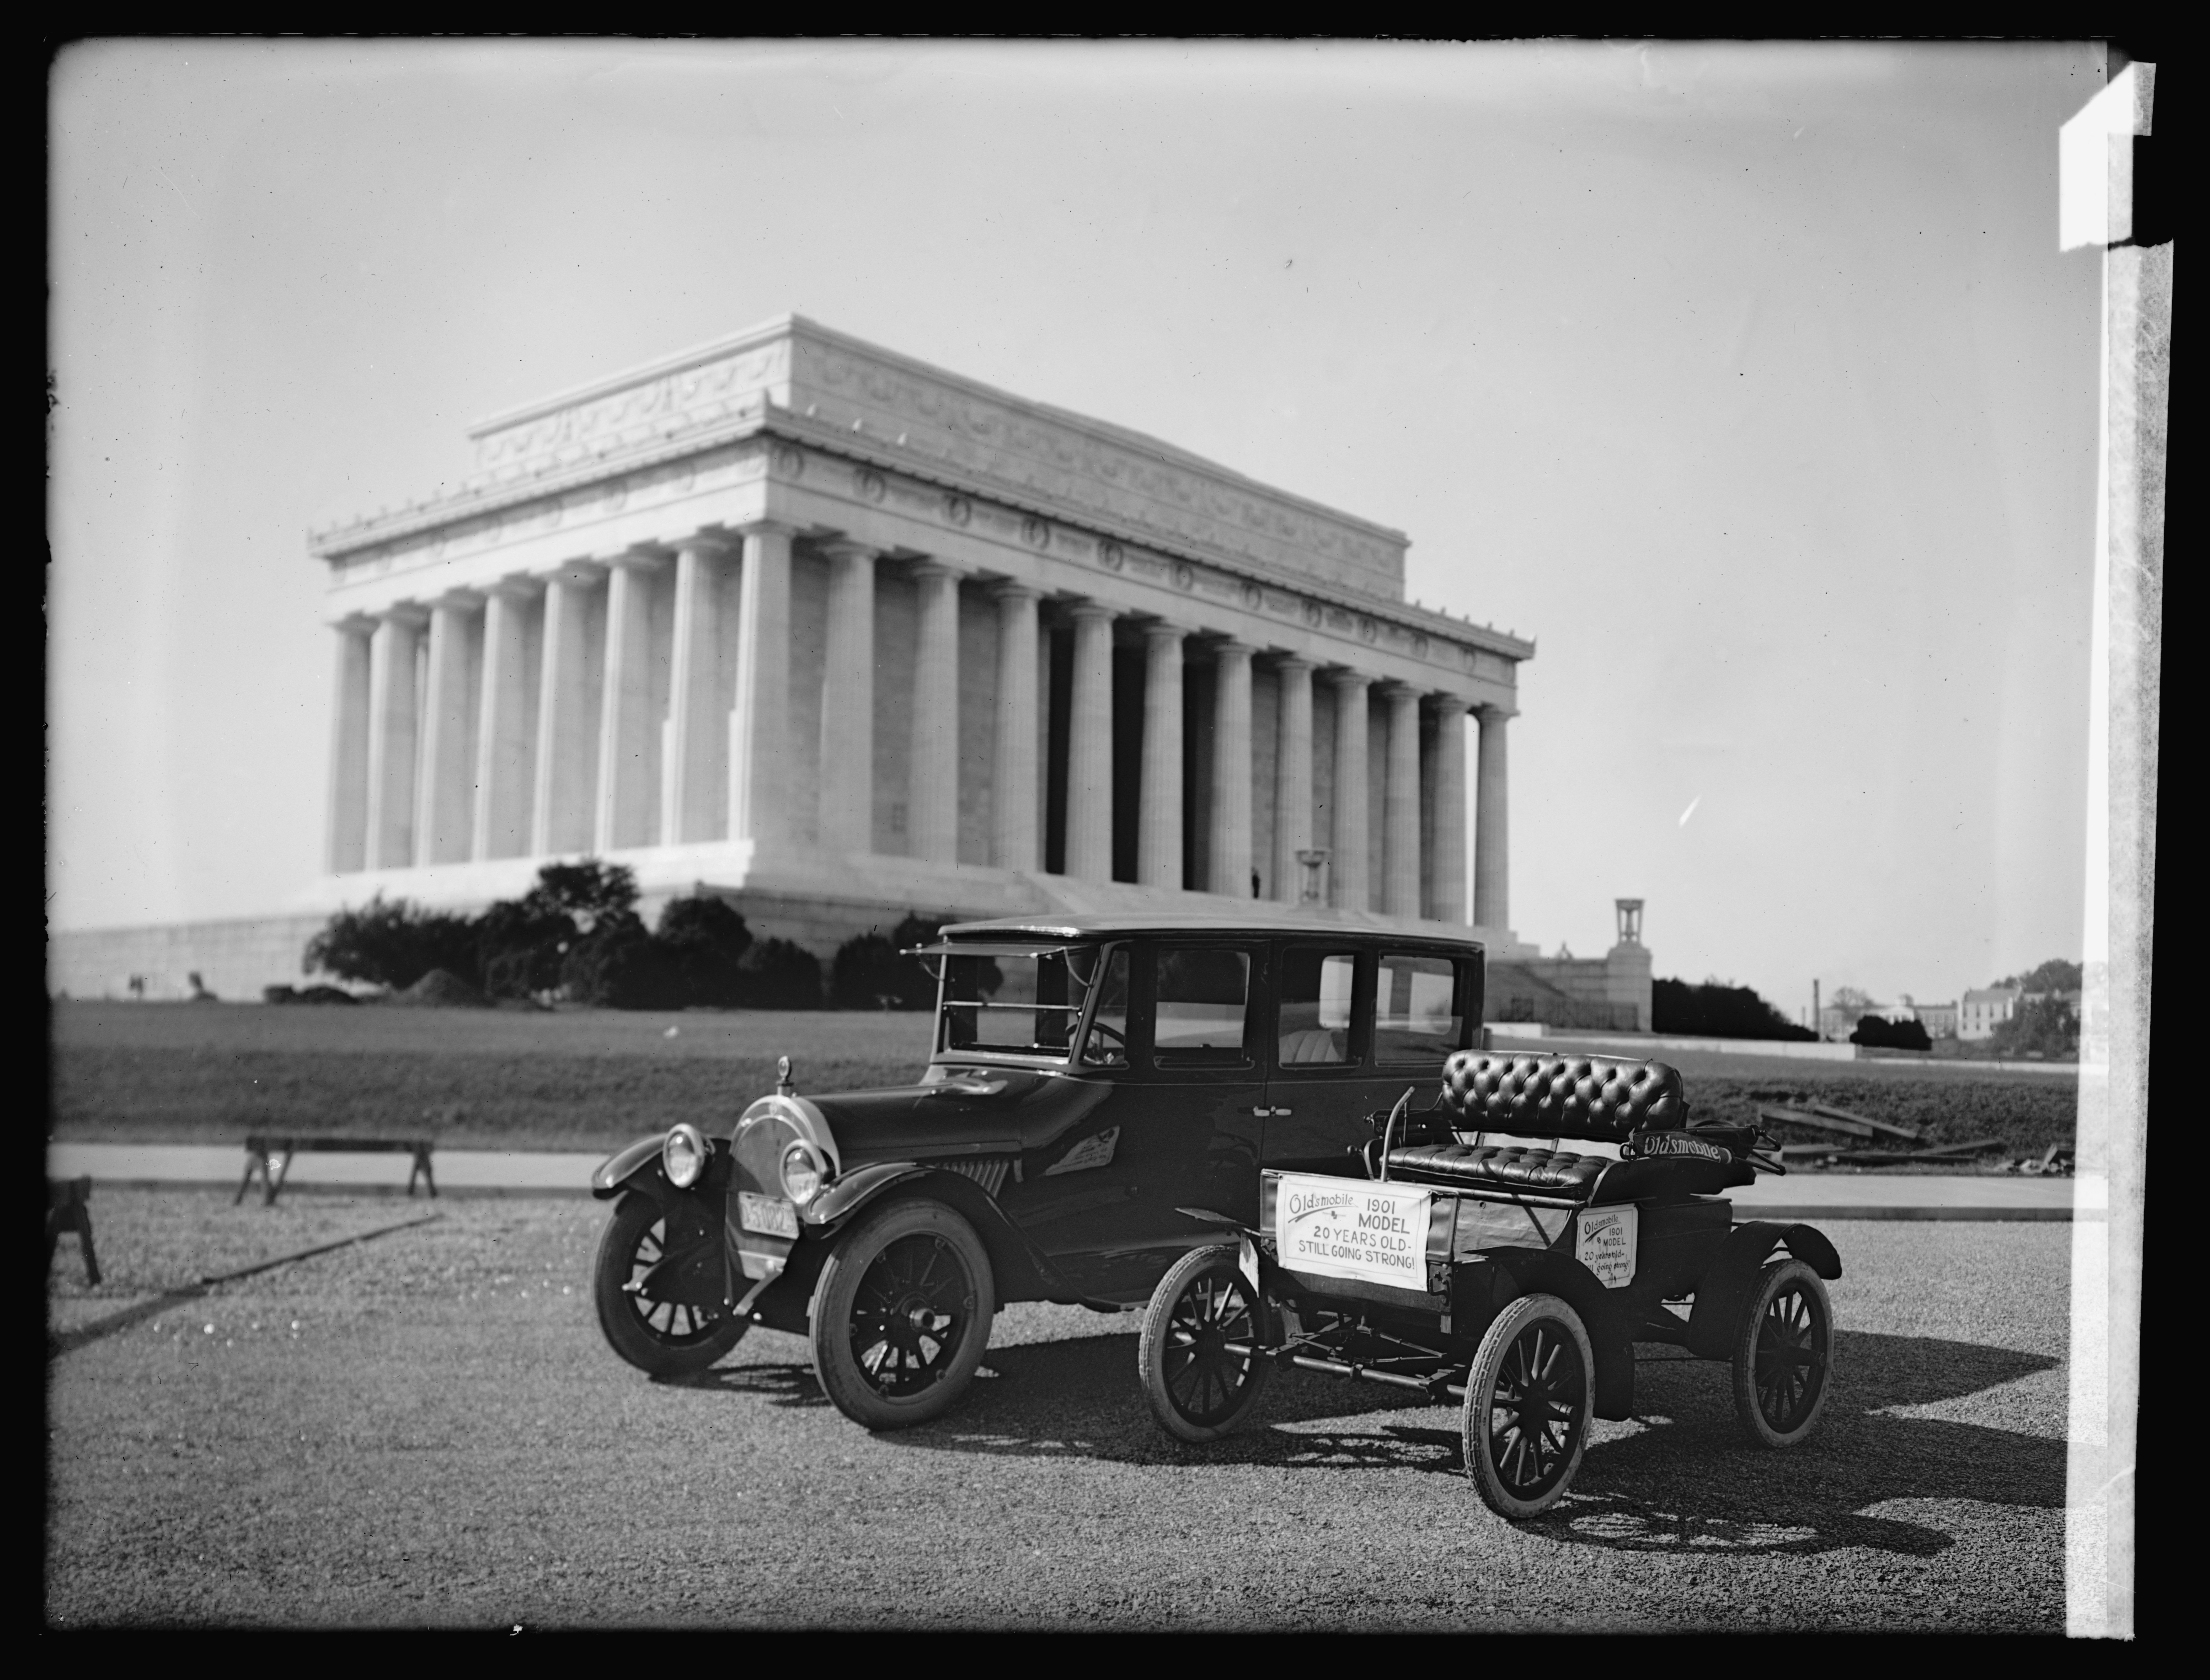 Oldsmobile (in front of Lincoln Memorial, Washington, D.C.) LCCN2016823795 - Title: Oldsmobile [in front of Lincoln Memorial, Washington, D.C.]
Abstract/medium: 1 negative : glass ; 8 x 6 in.